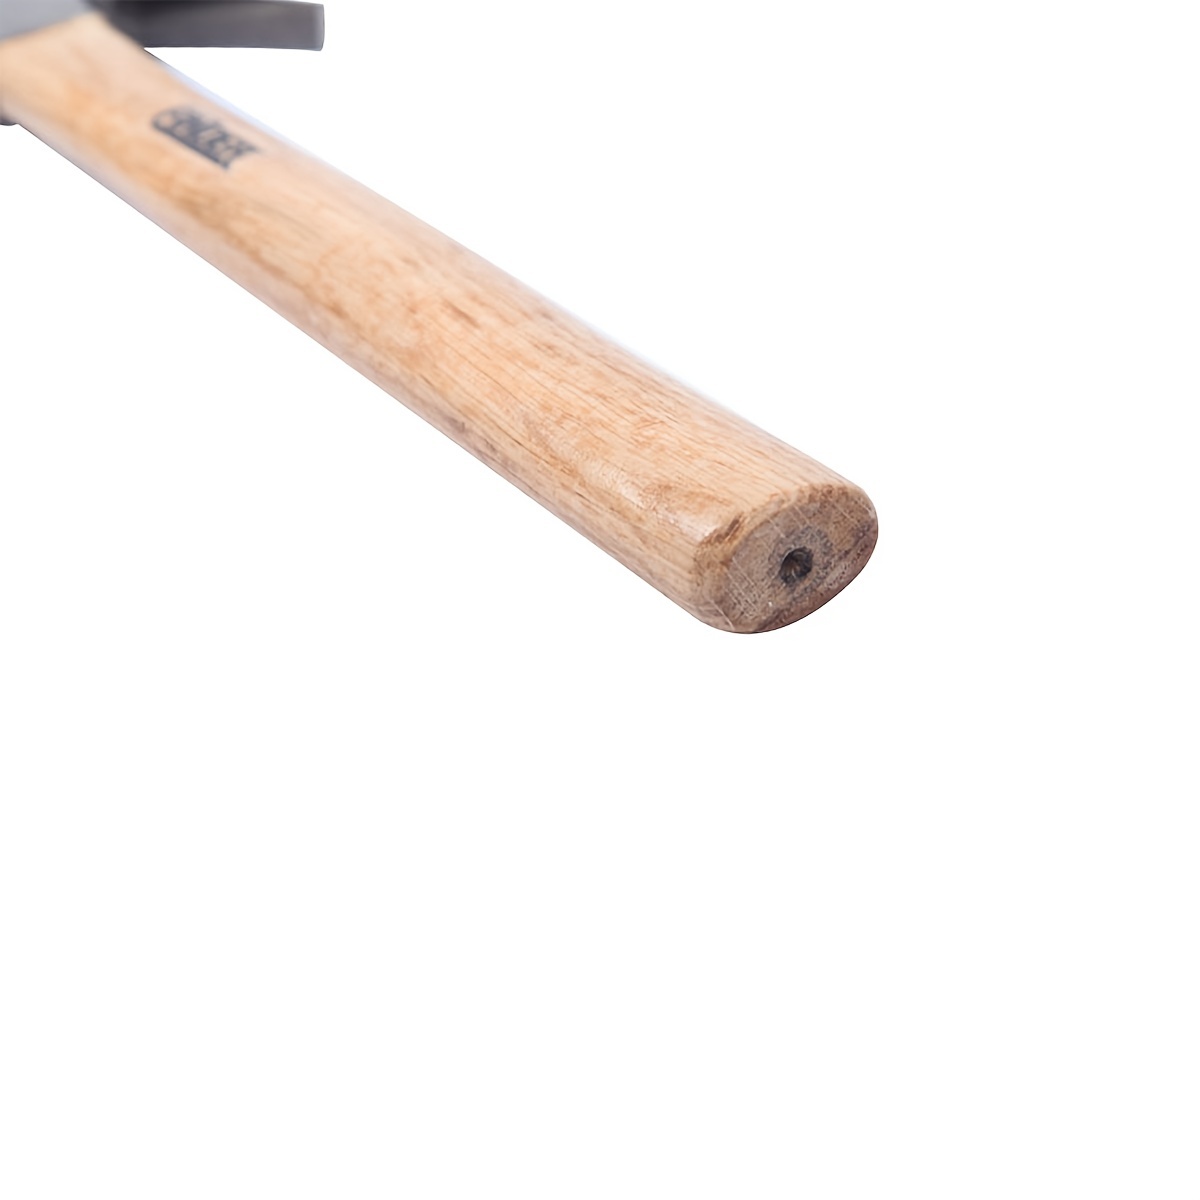 VTG Cute 5 Miniature Hammer – Wooden Handle – Steel Head – MINIATURE TOOL